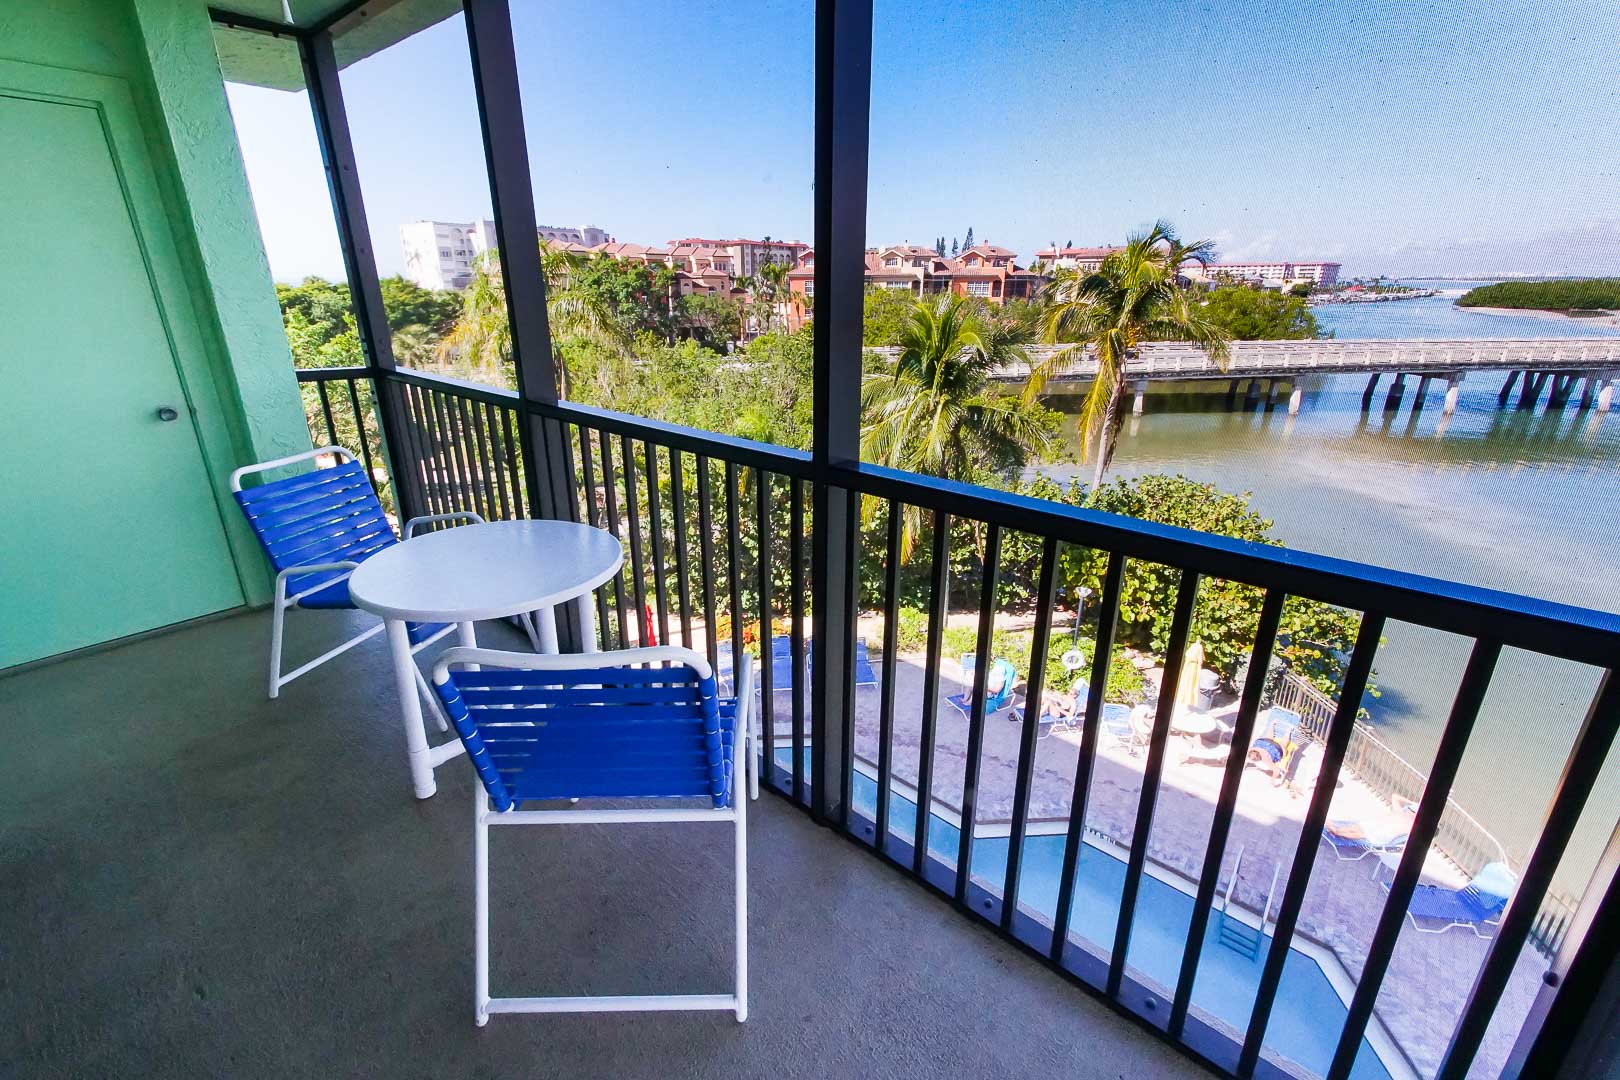 A beautiful beach front balcony at VRI's Bonita Resort and Club in Florida.